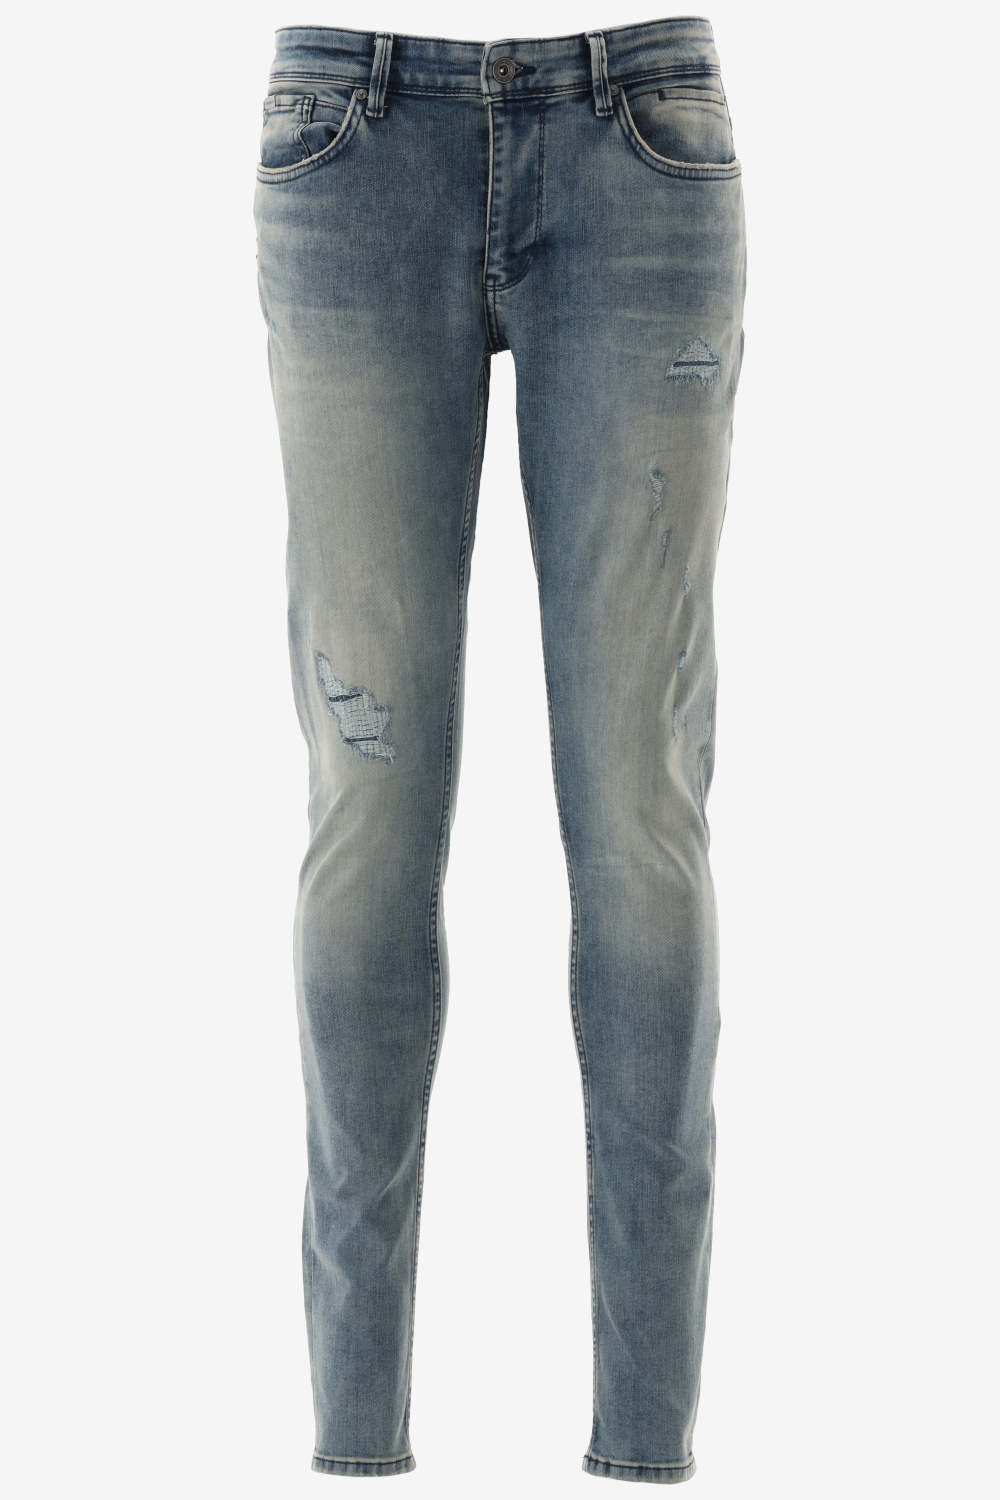 Purewhite - Jone Distressed Skinny Heren Skinny Fit Jeans - Blauw - Maat 36